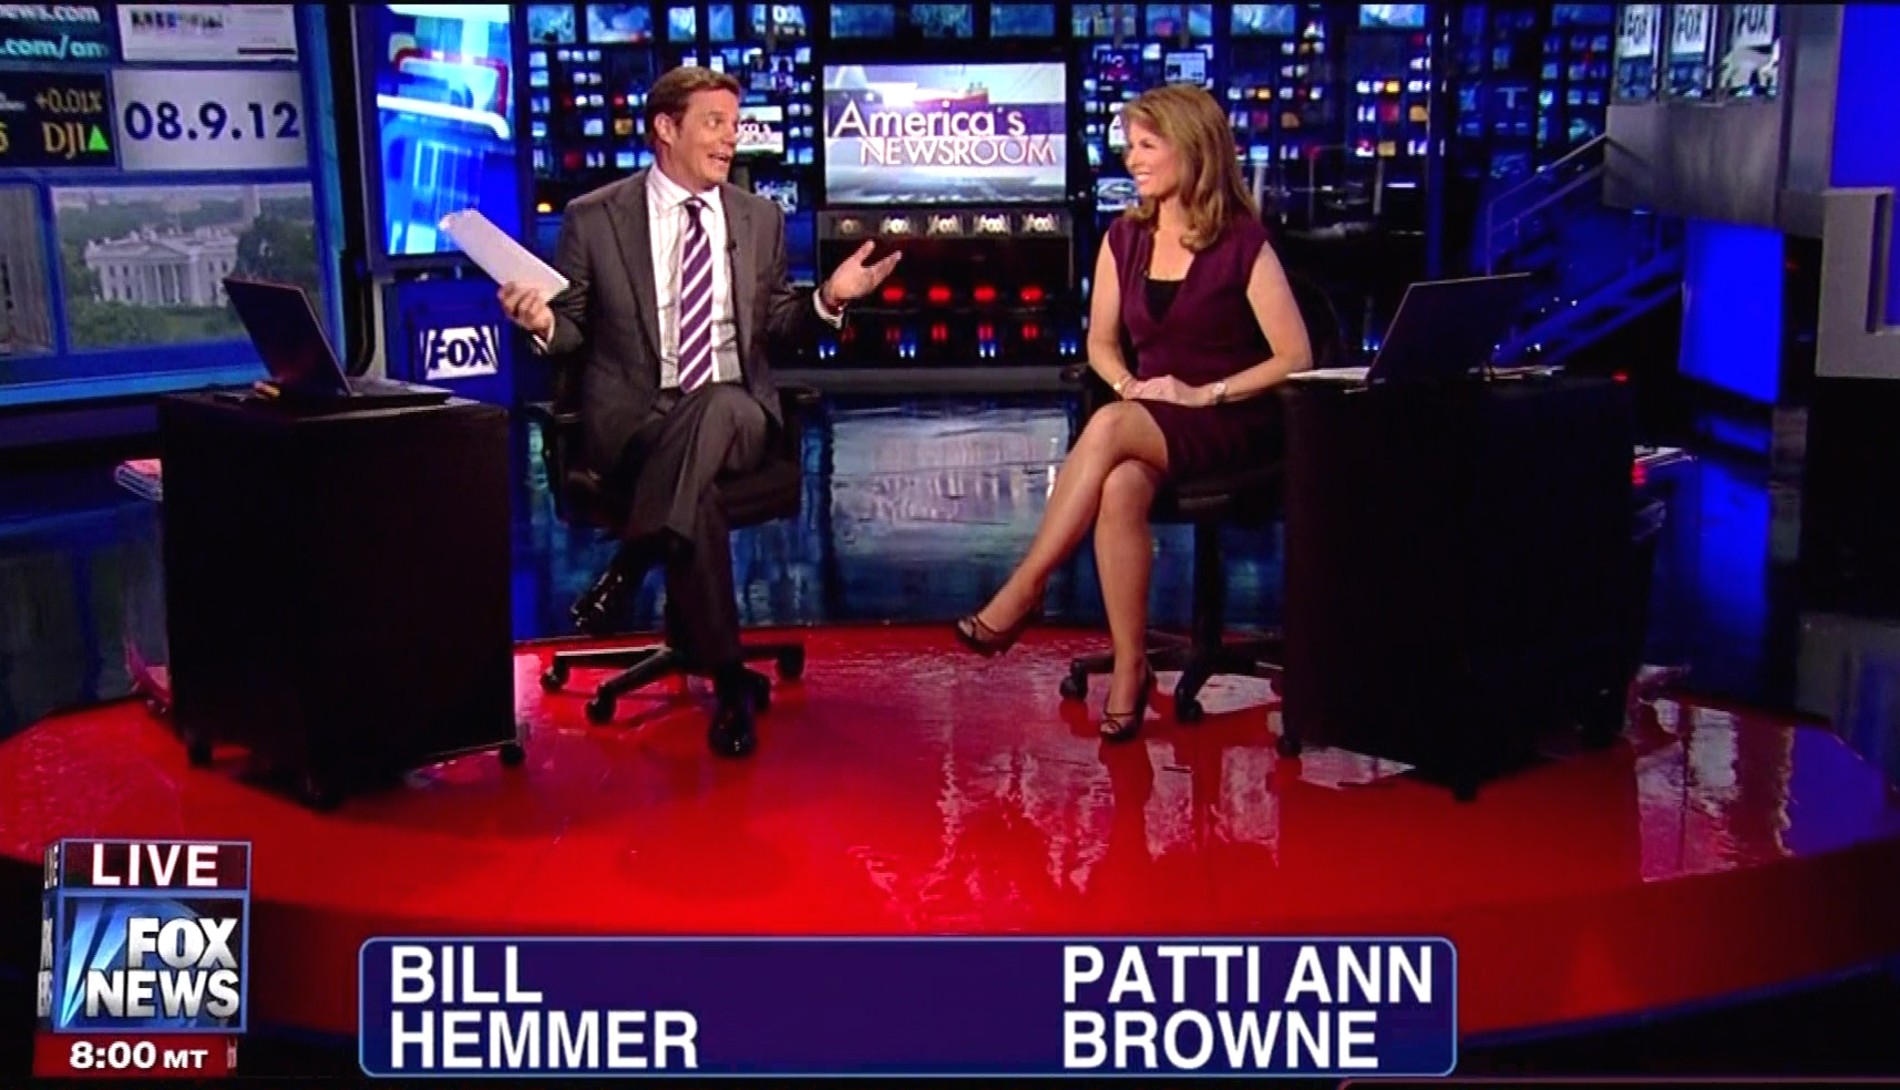 Bill Hemmer and Patti Ann Browne anchor America's Newsroom on Fox